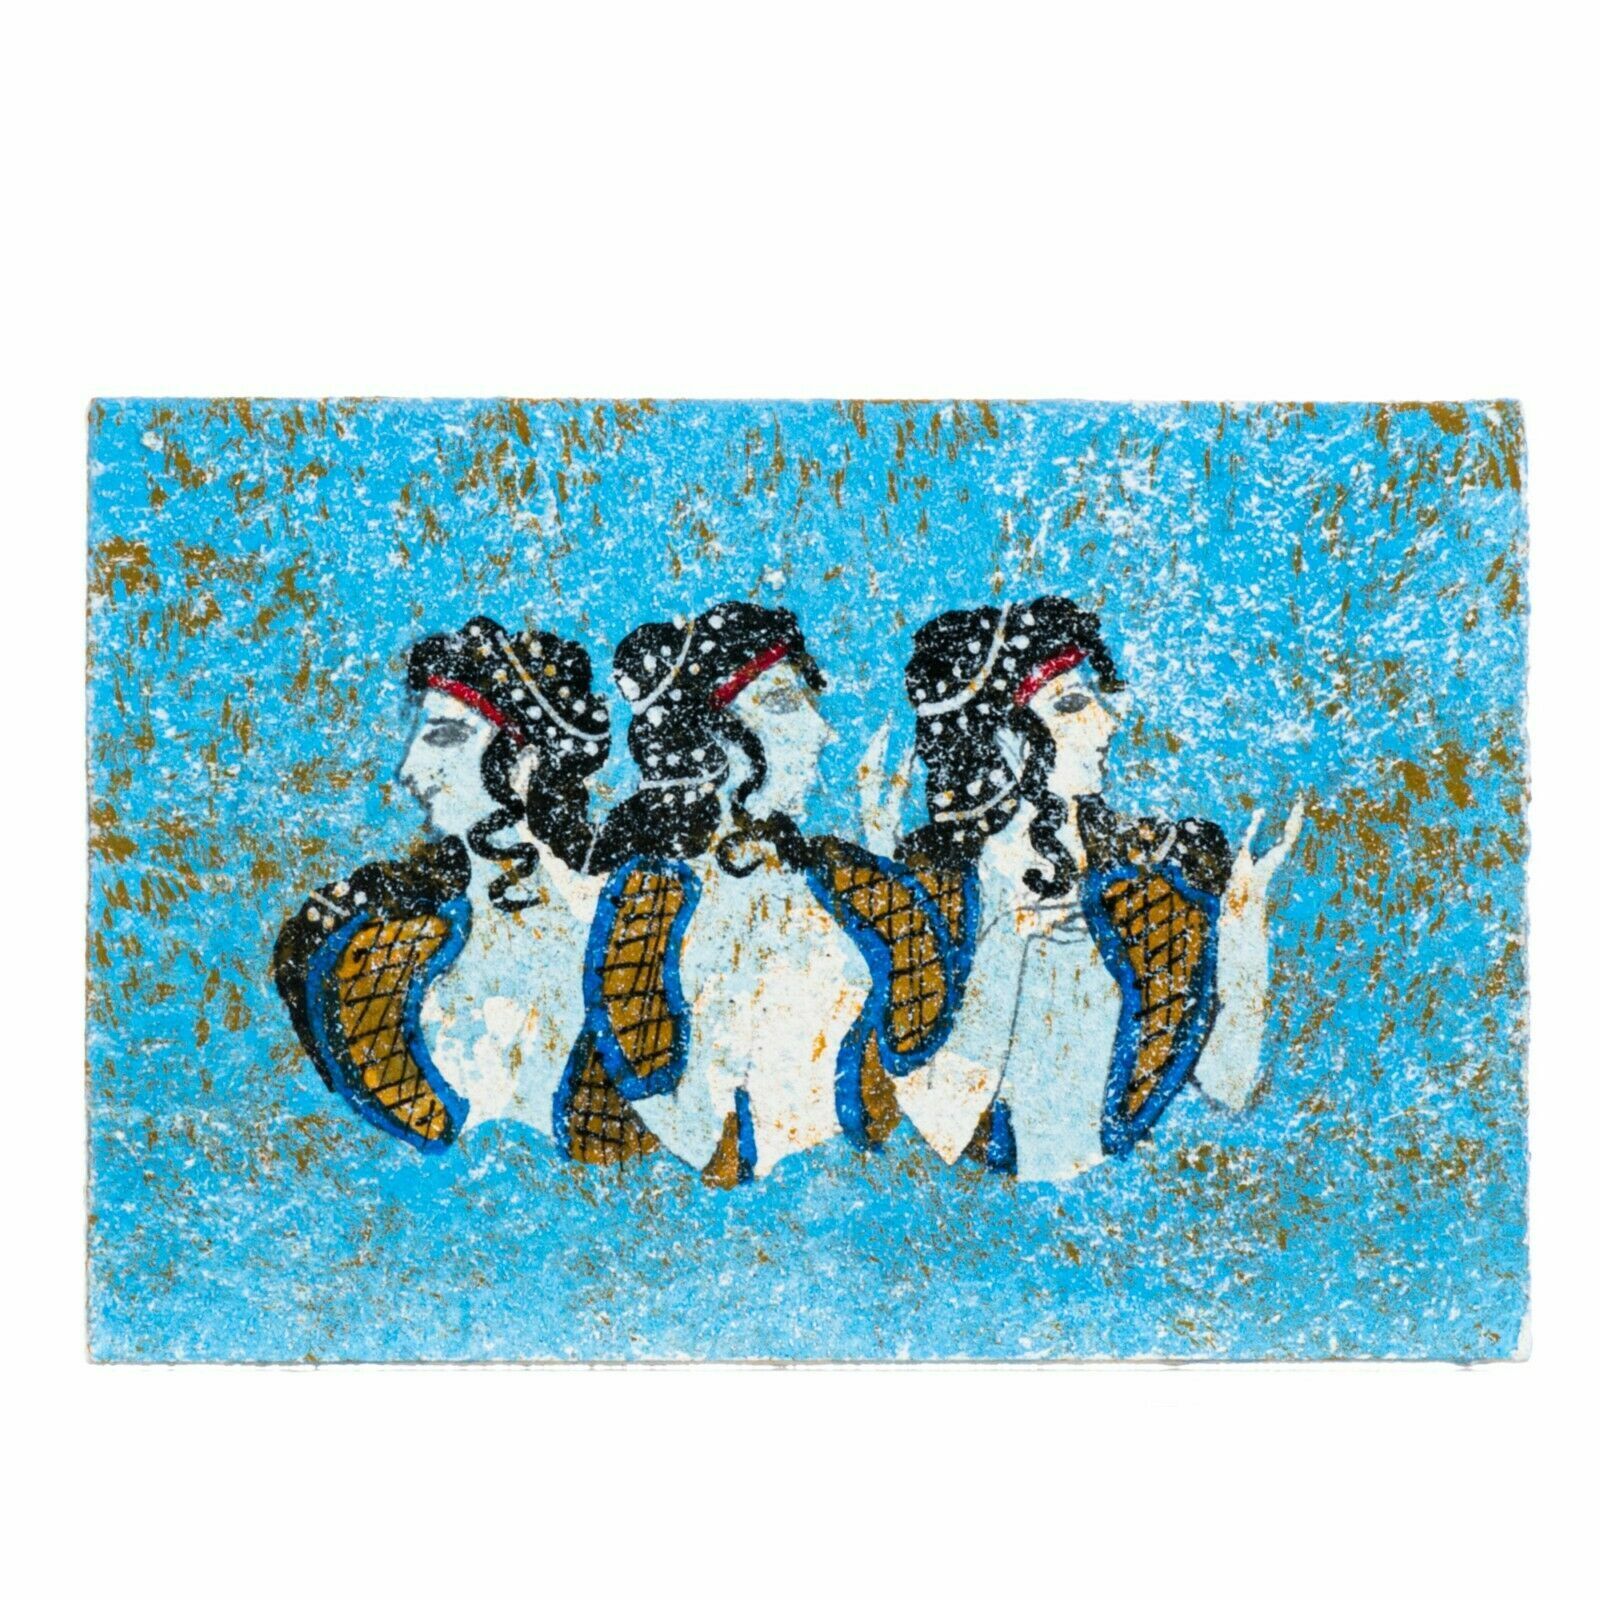 Ancient Greek Minoan Wall Painting Ladies in Blue Small Handmade Decoration